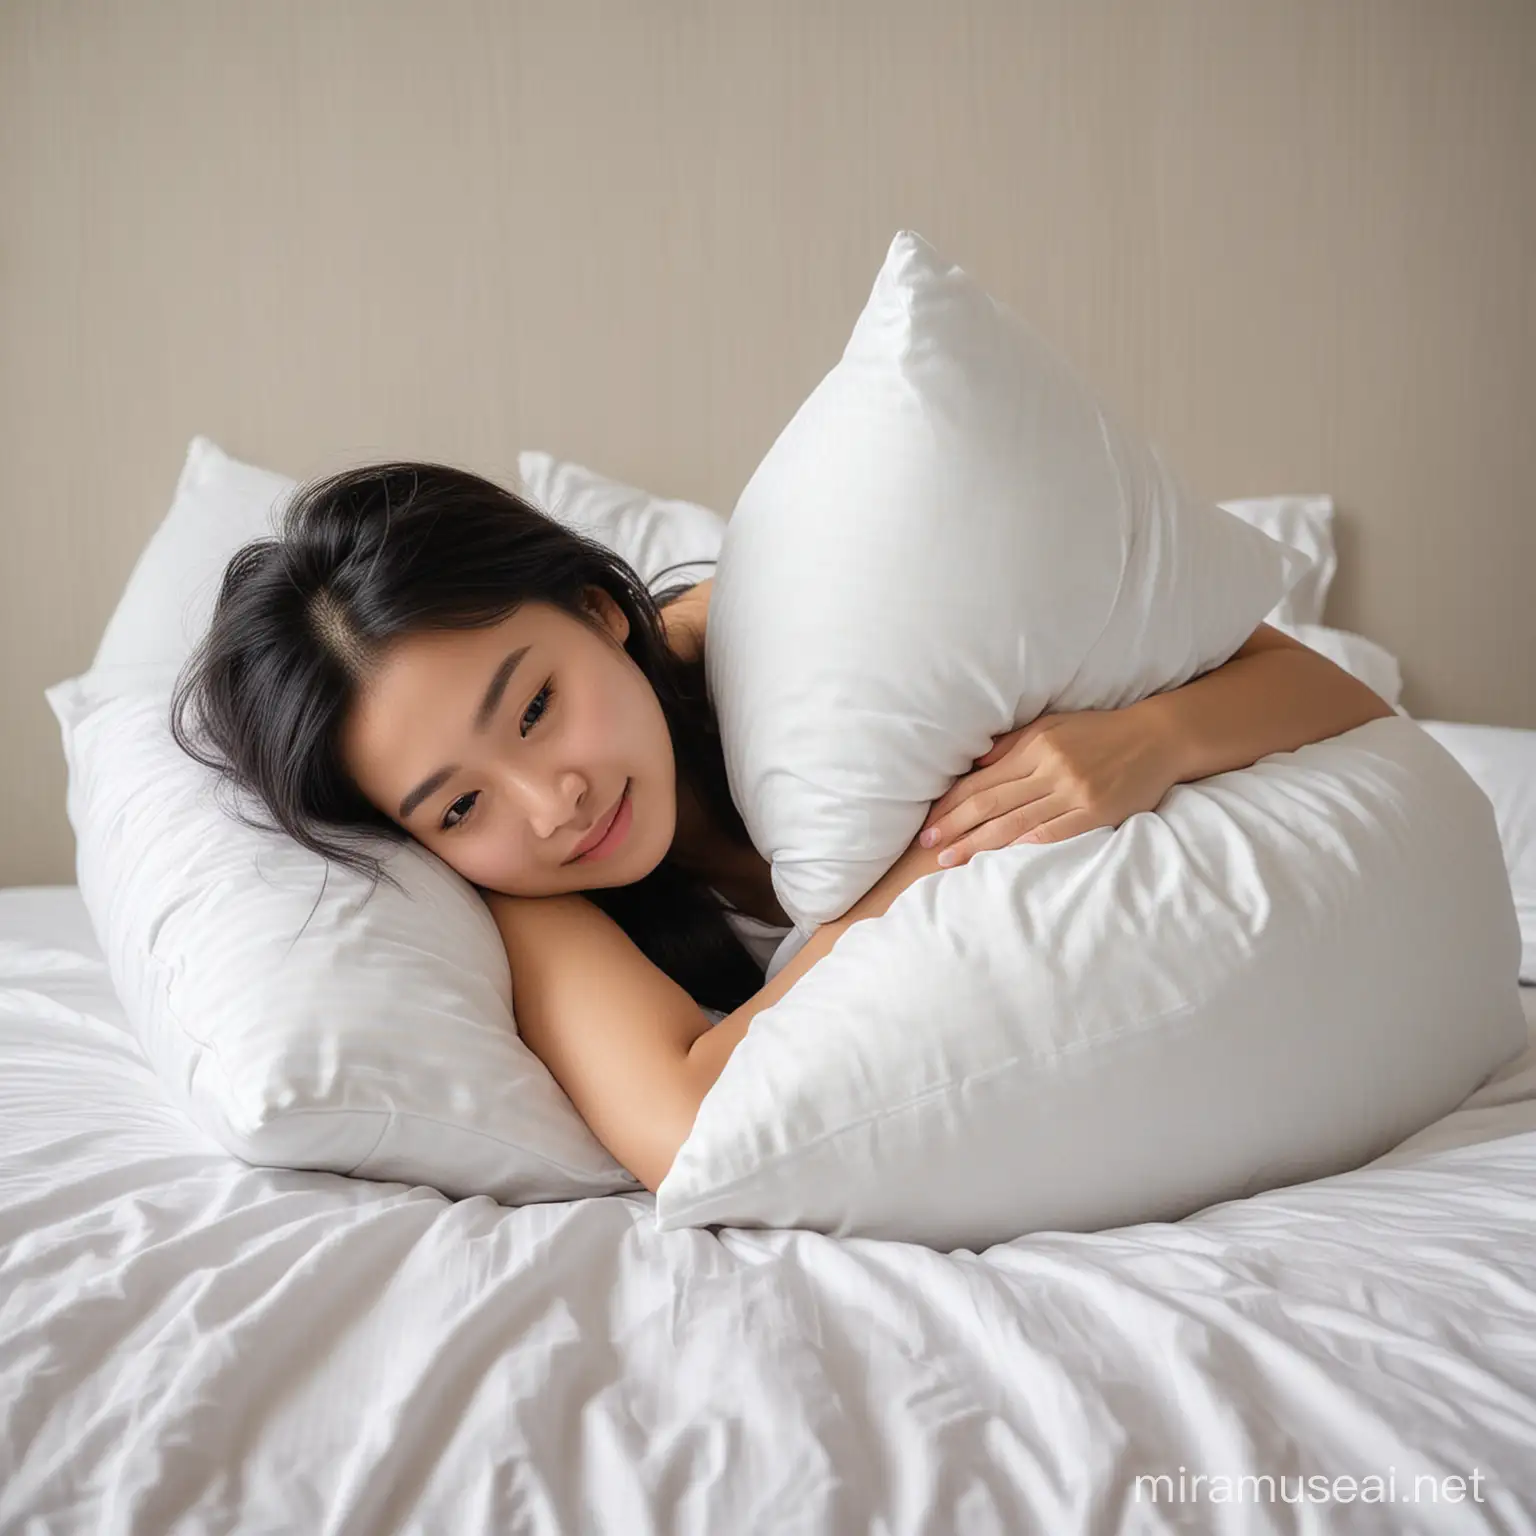 Asian Girl Hugging Pillow in Bed